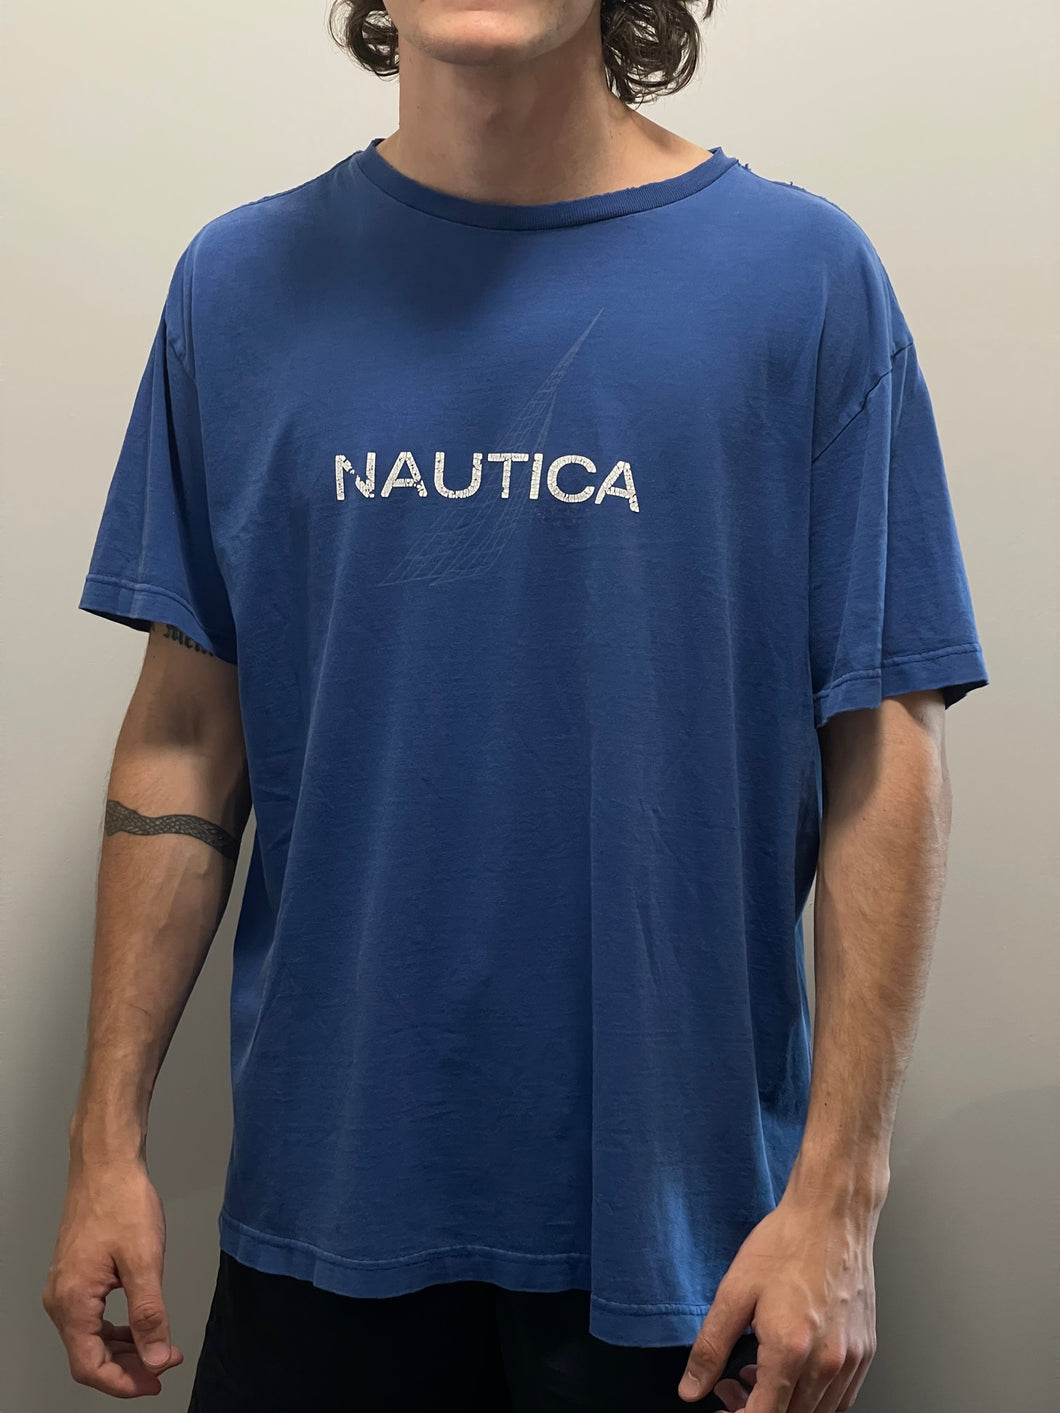 Nautica Blue T-Shirt (L)